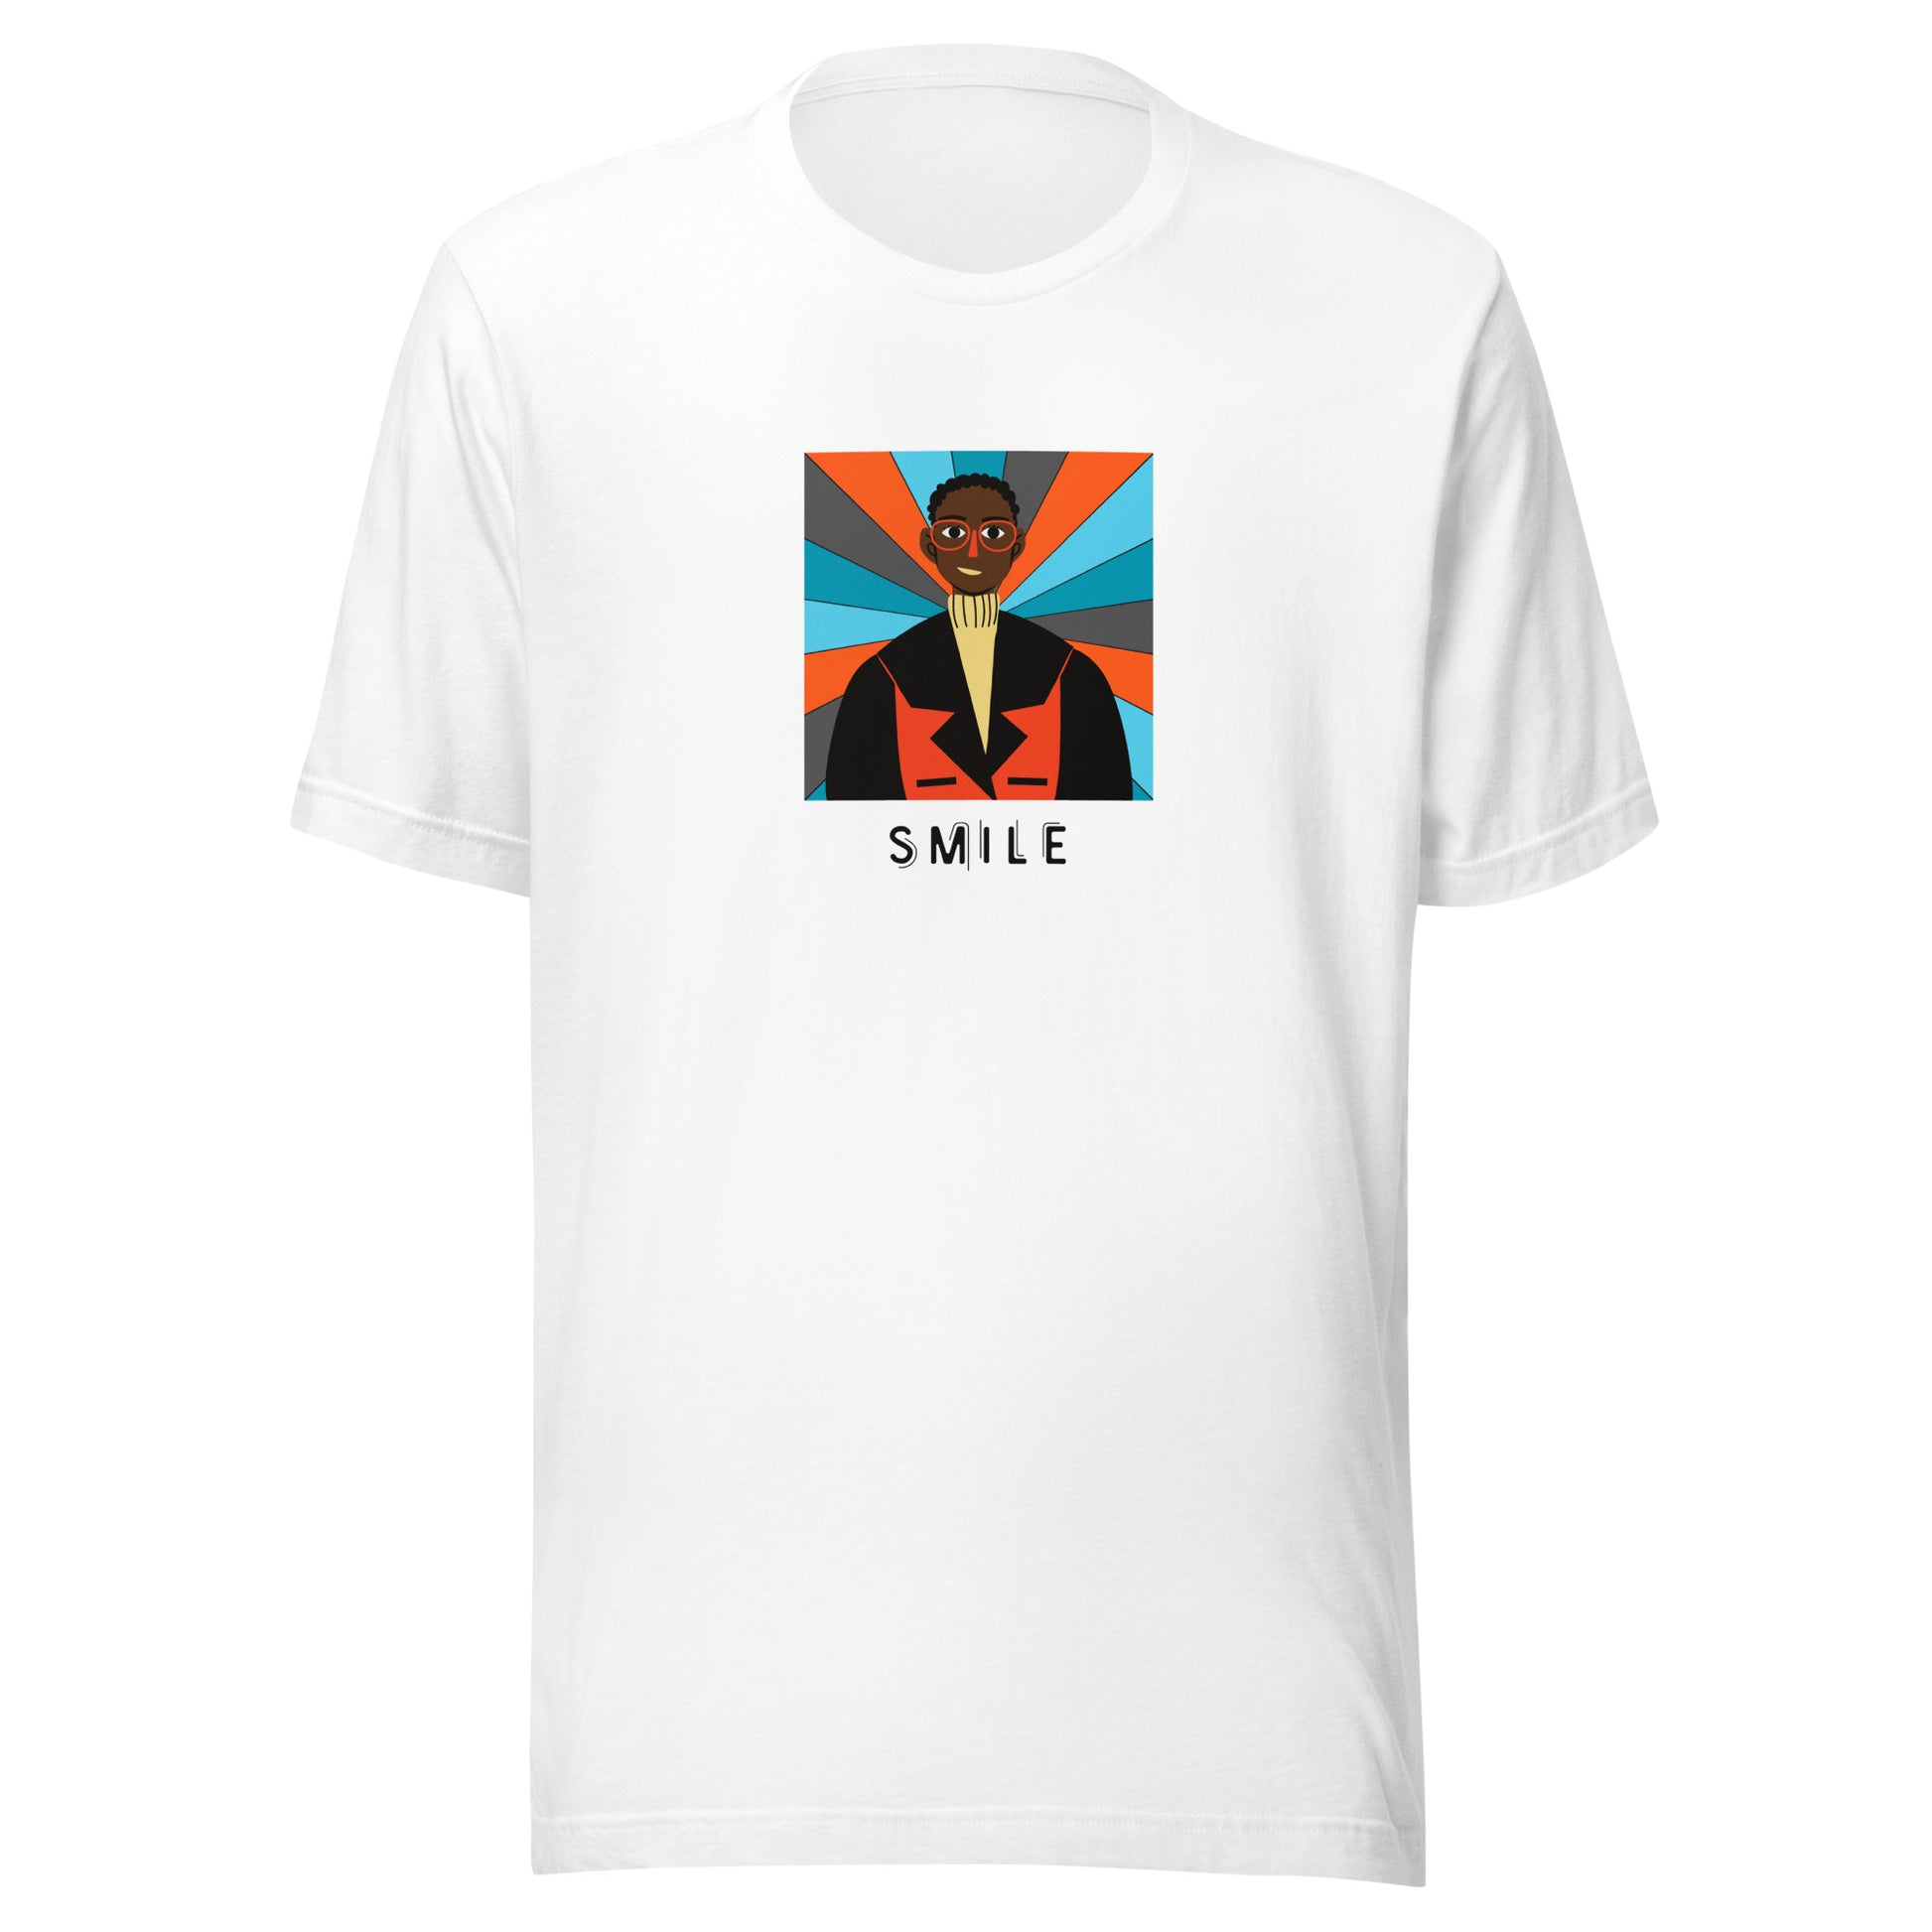 Vintage Smile Unisex T-Shirt - Timeless Joy in Every Stitch